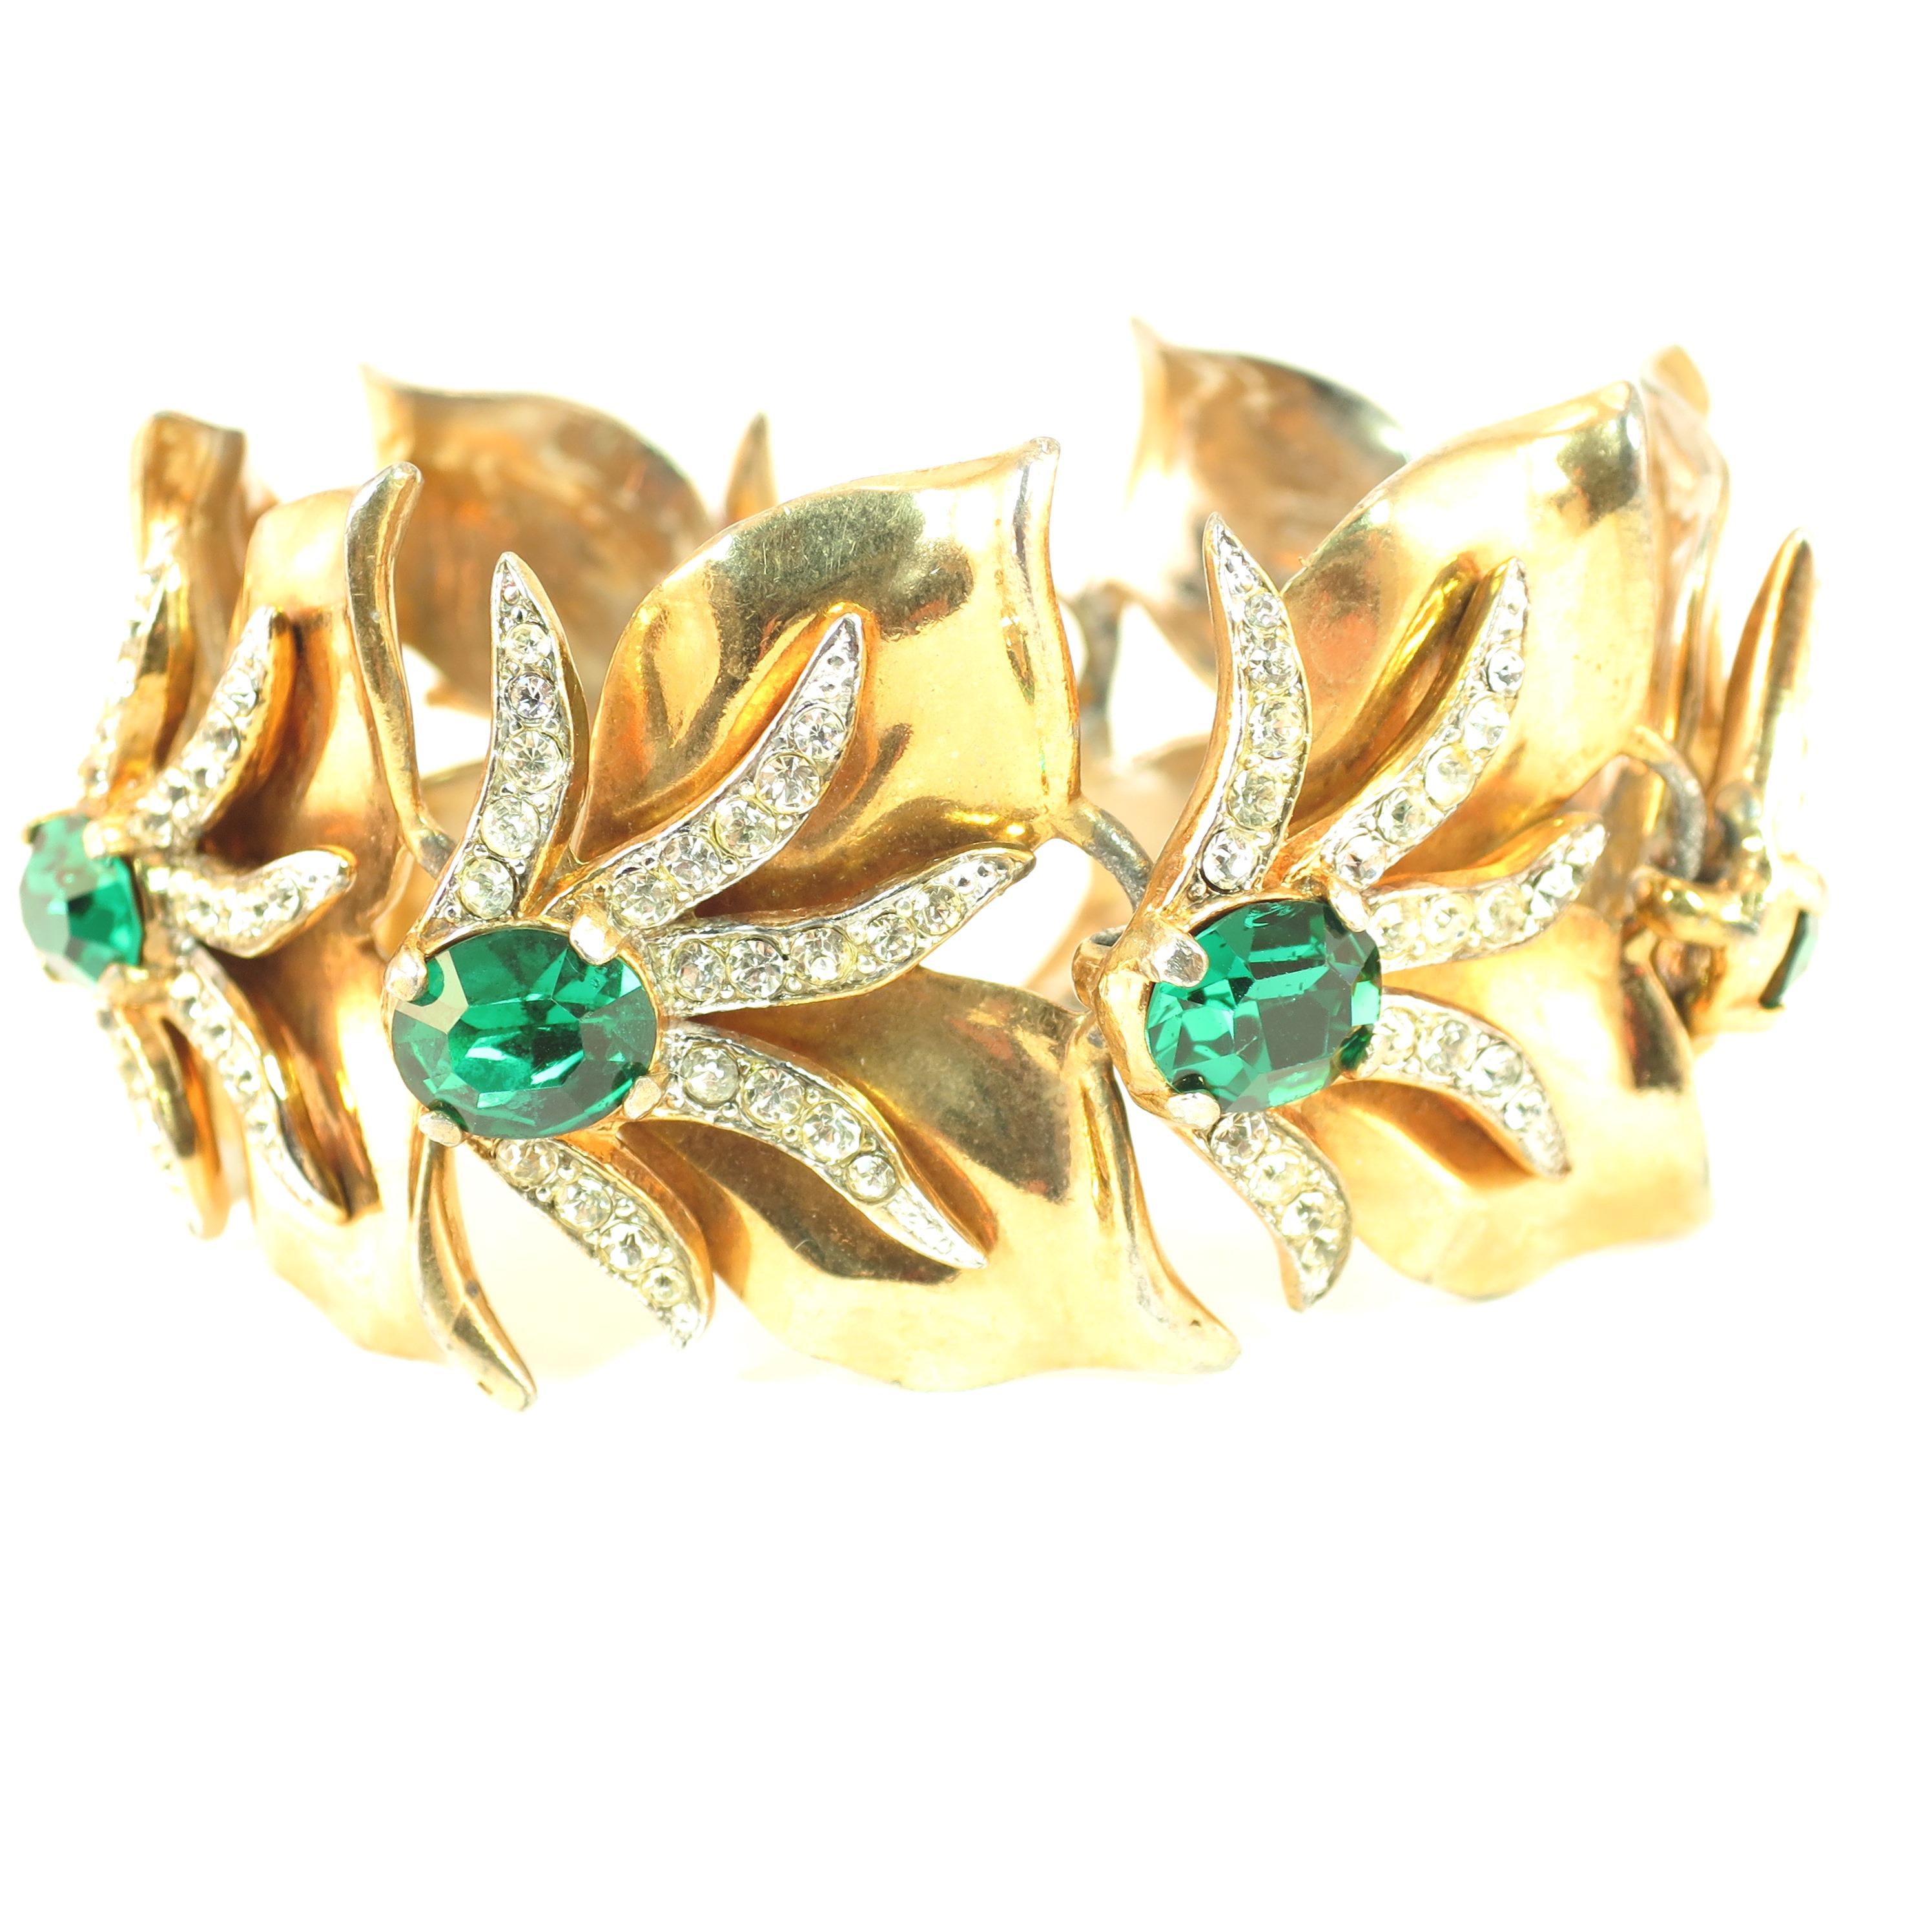 Modernist Abstract Emerald Crystal Linked Bracelet, 1940s For Sale 9